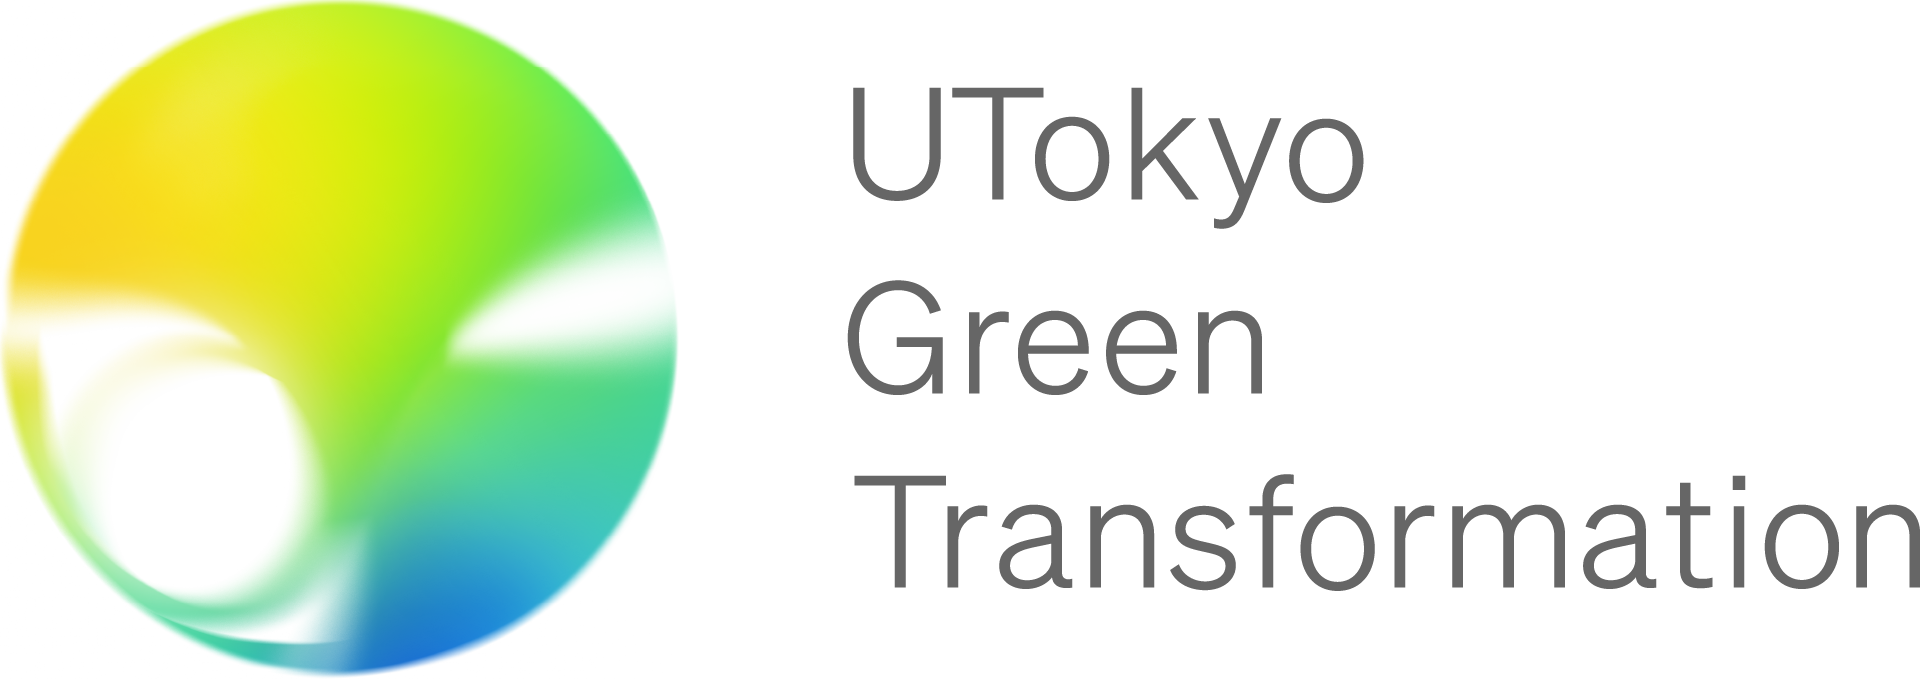 UTokyo Green Transformationロゴ